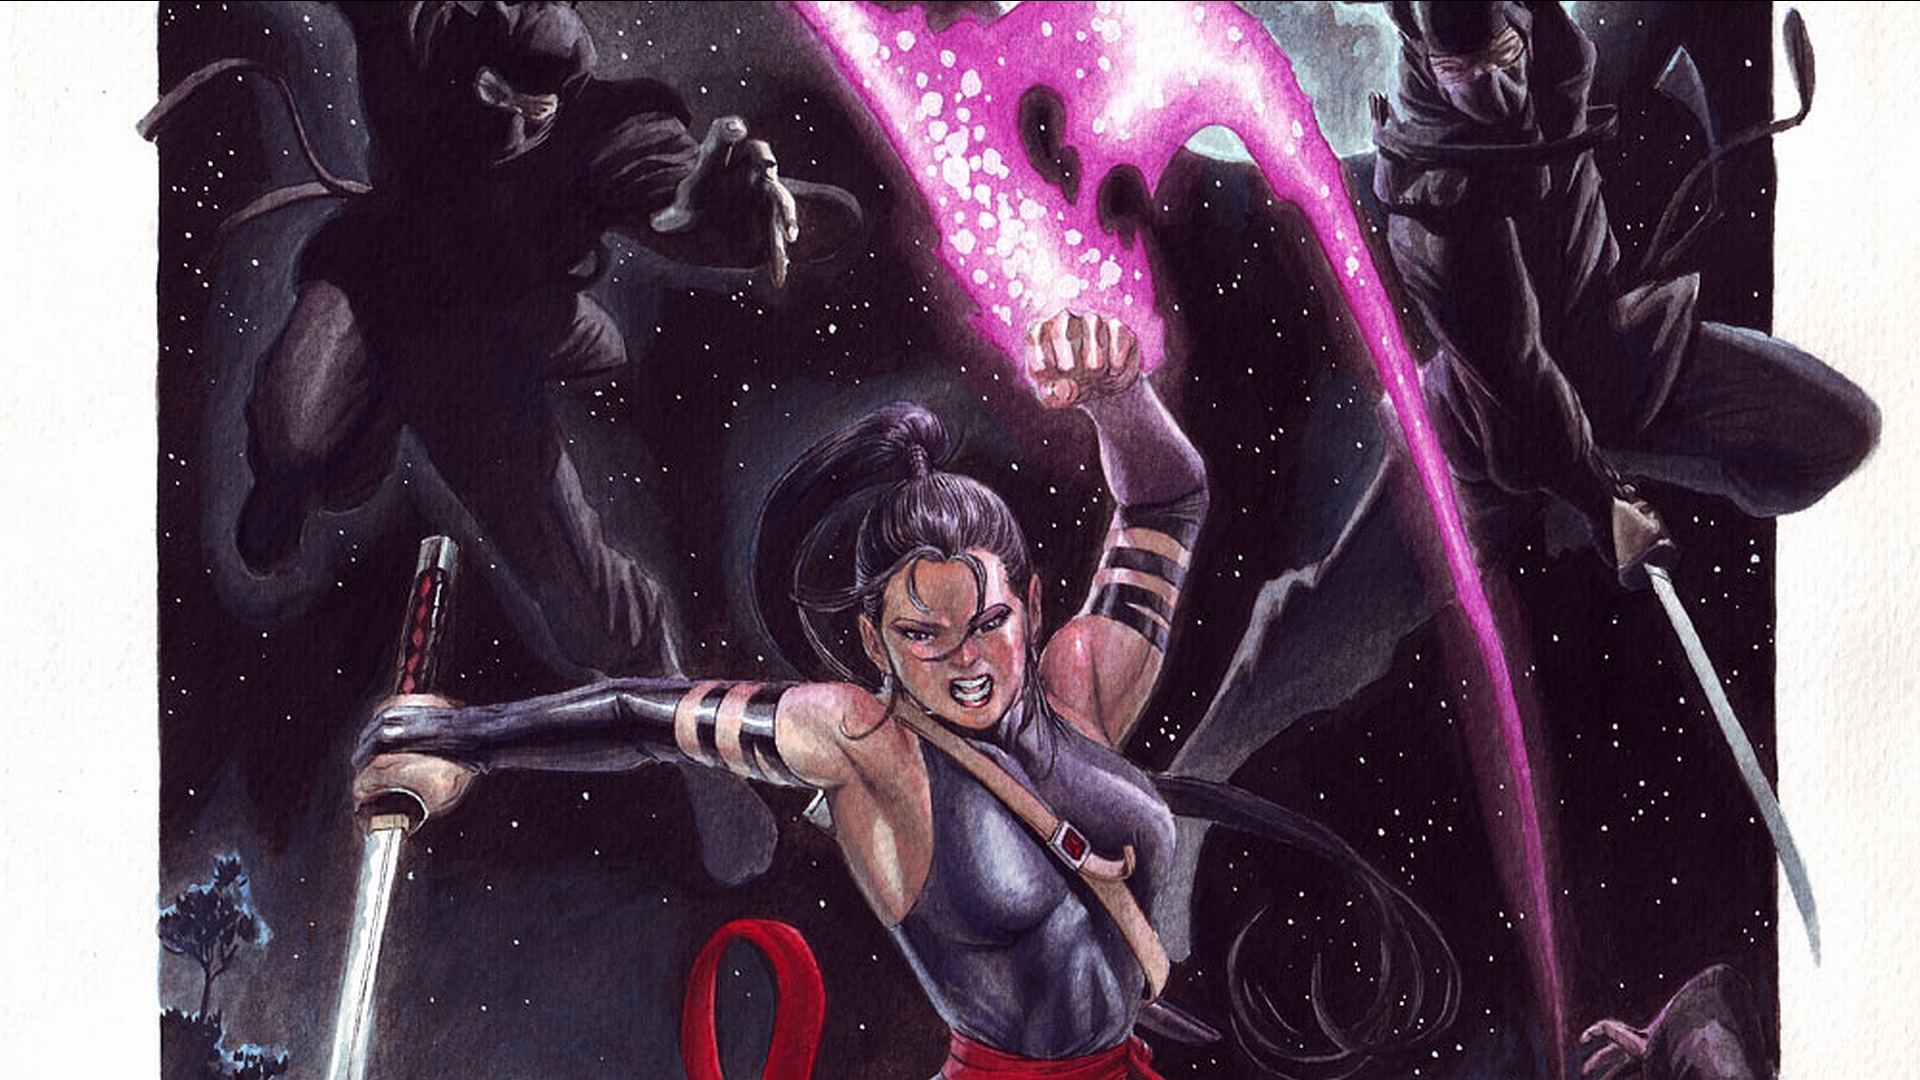 Psylocke in action, displaying her incredible comic powers.